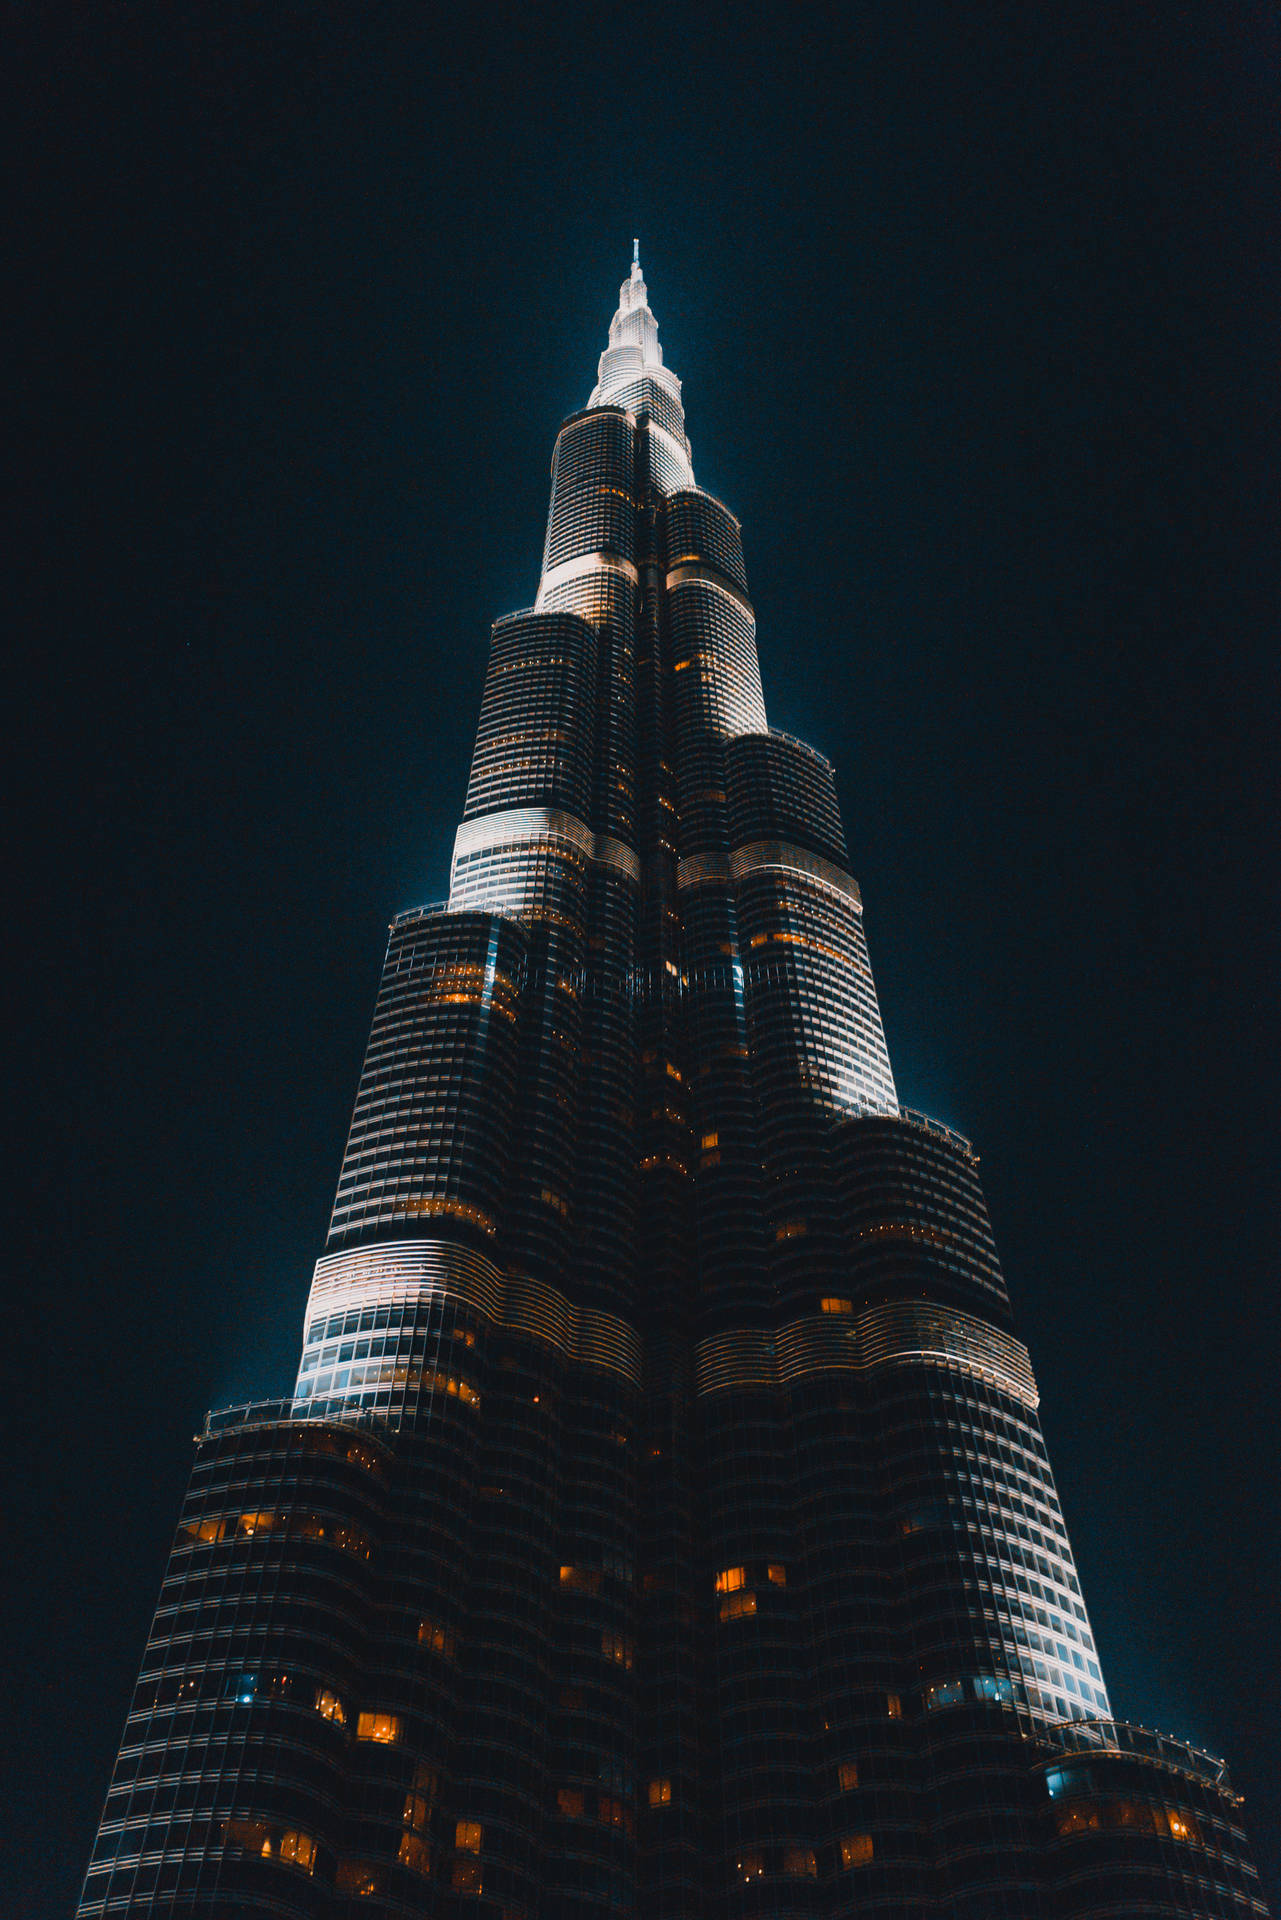 Burj Khalifa Skyscraper At Night